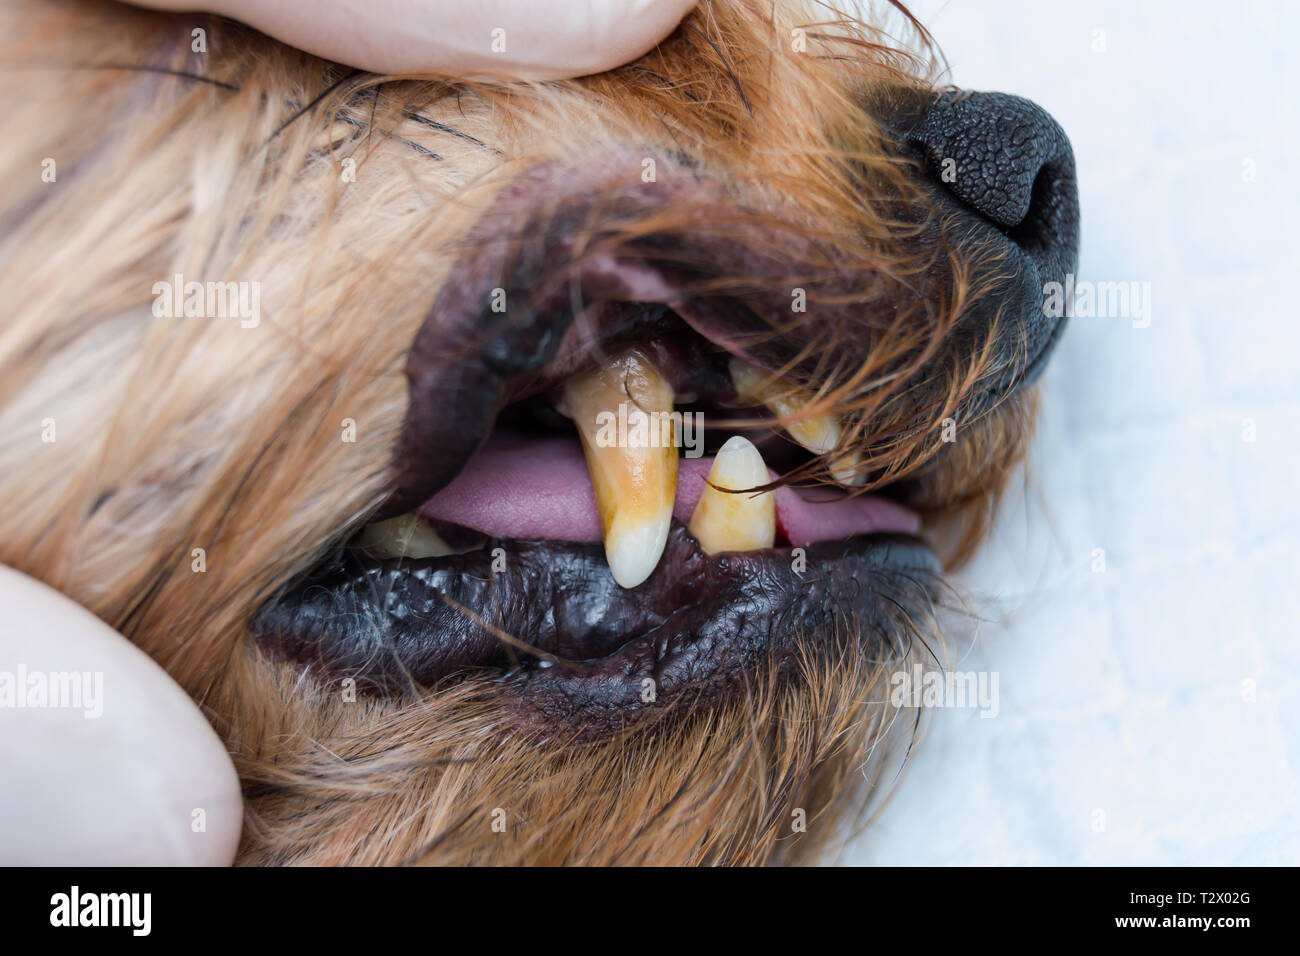 Dog Teeth With Tartar And Stinky Mouth Stock Photo Alamy